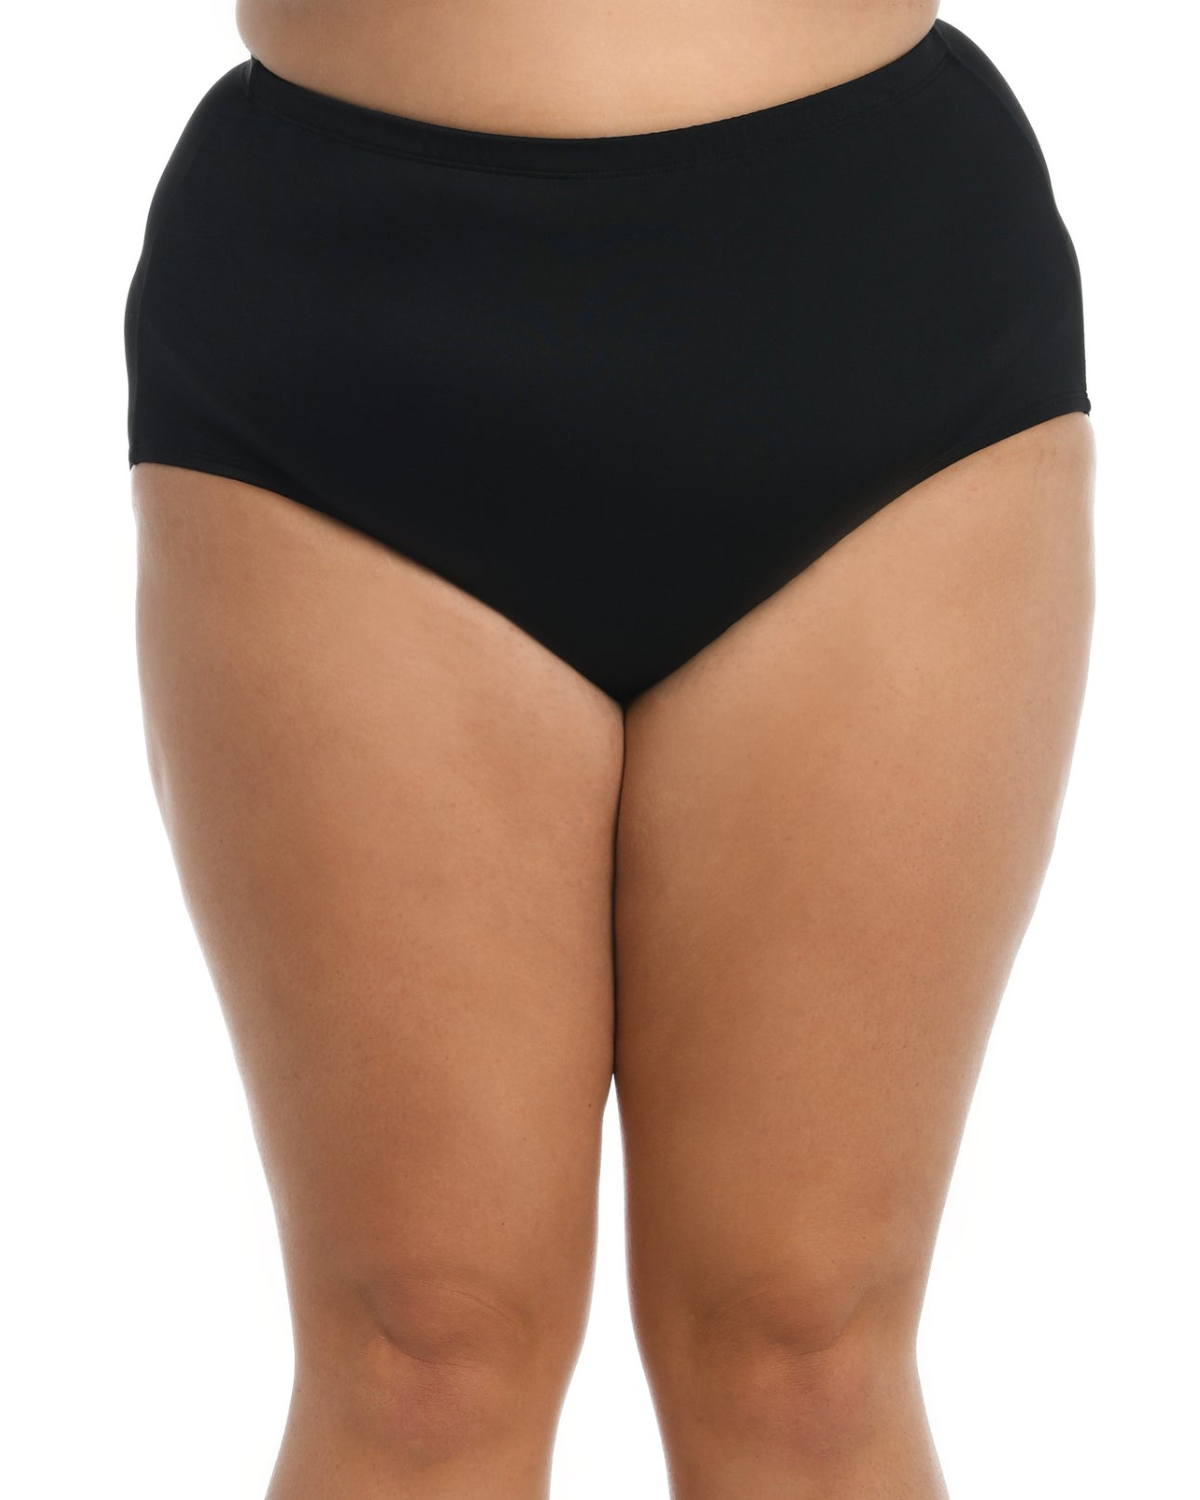 Plus size model wearing a full pant bikini brief in black